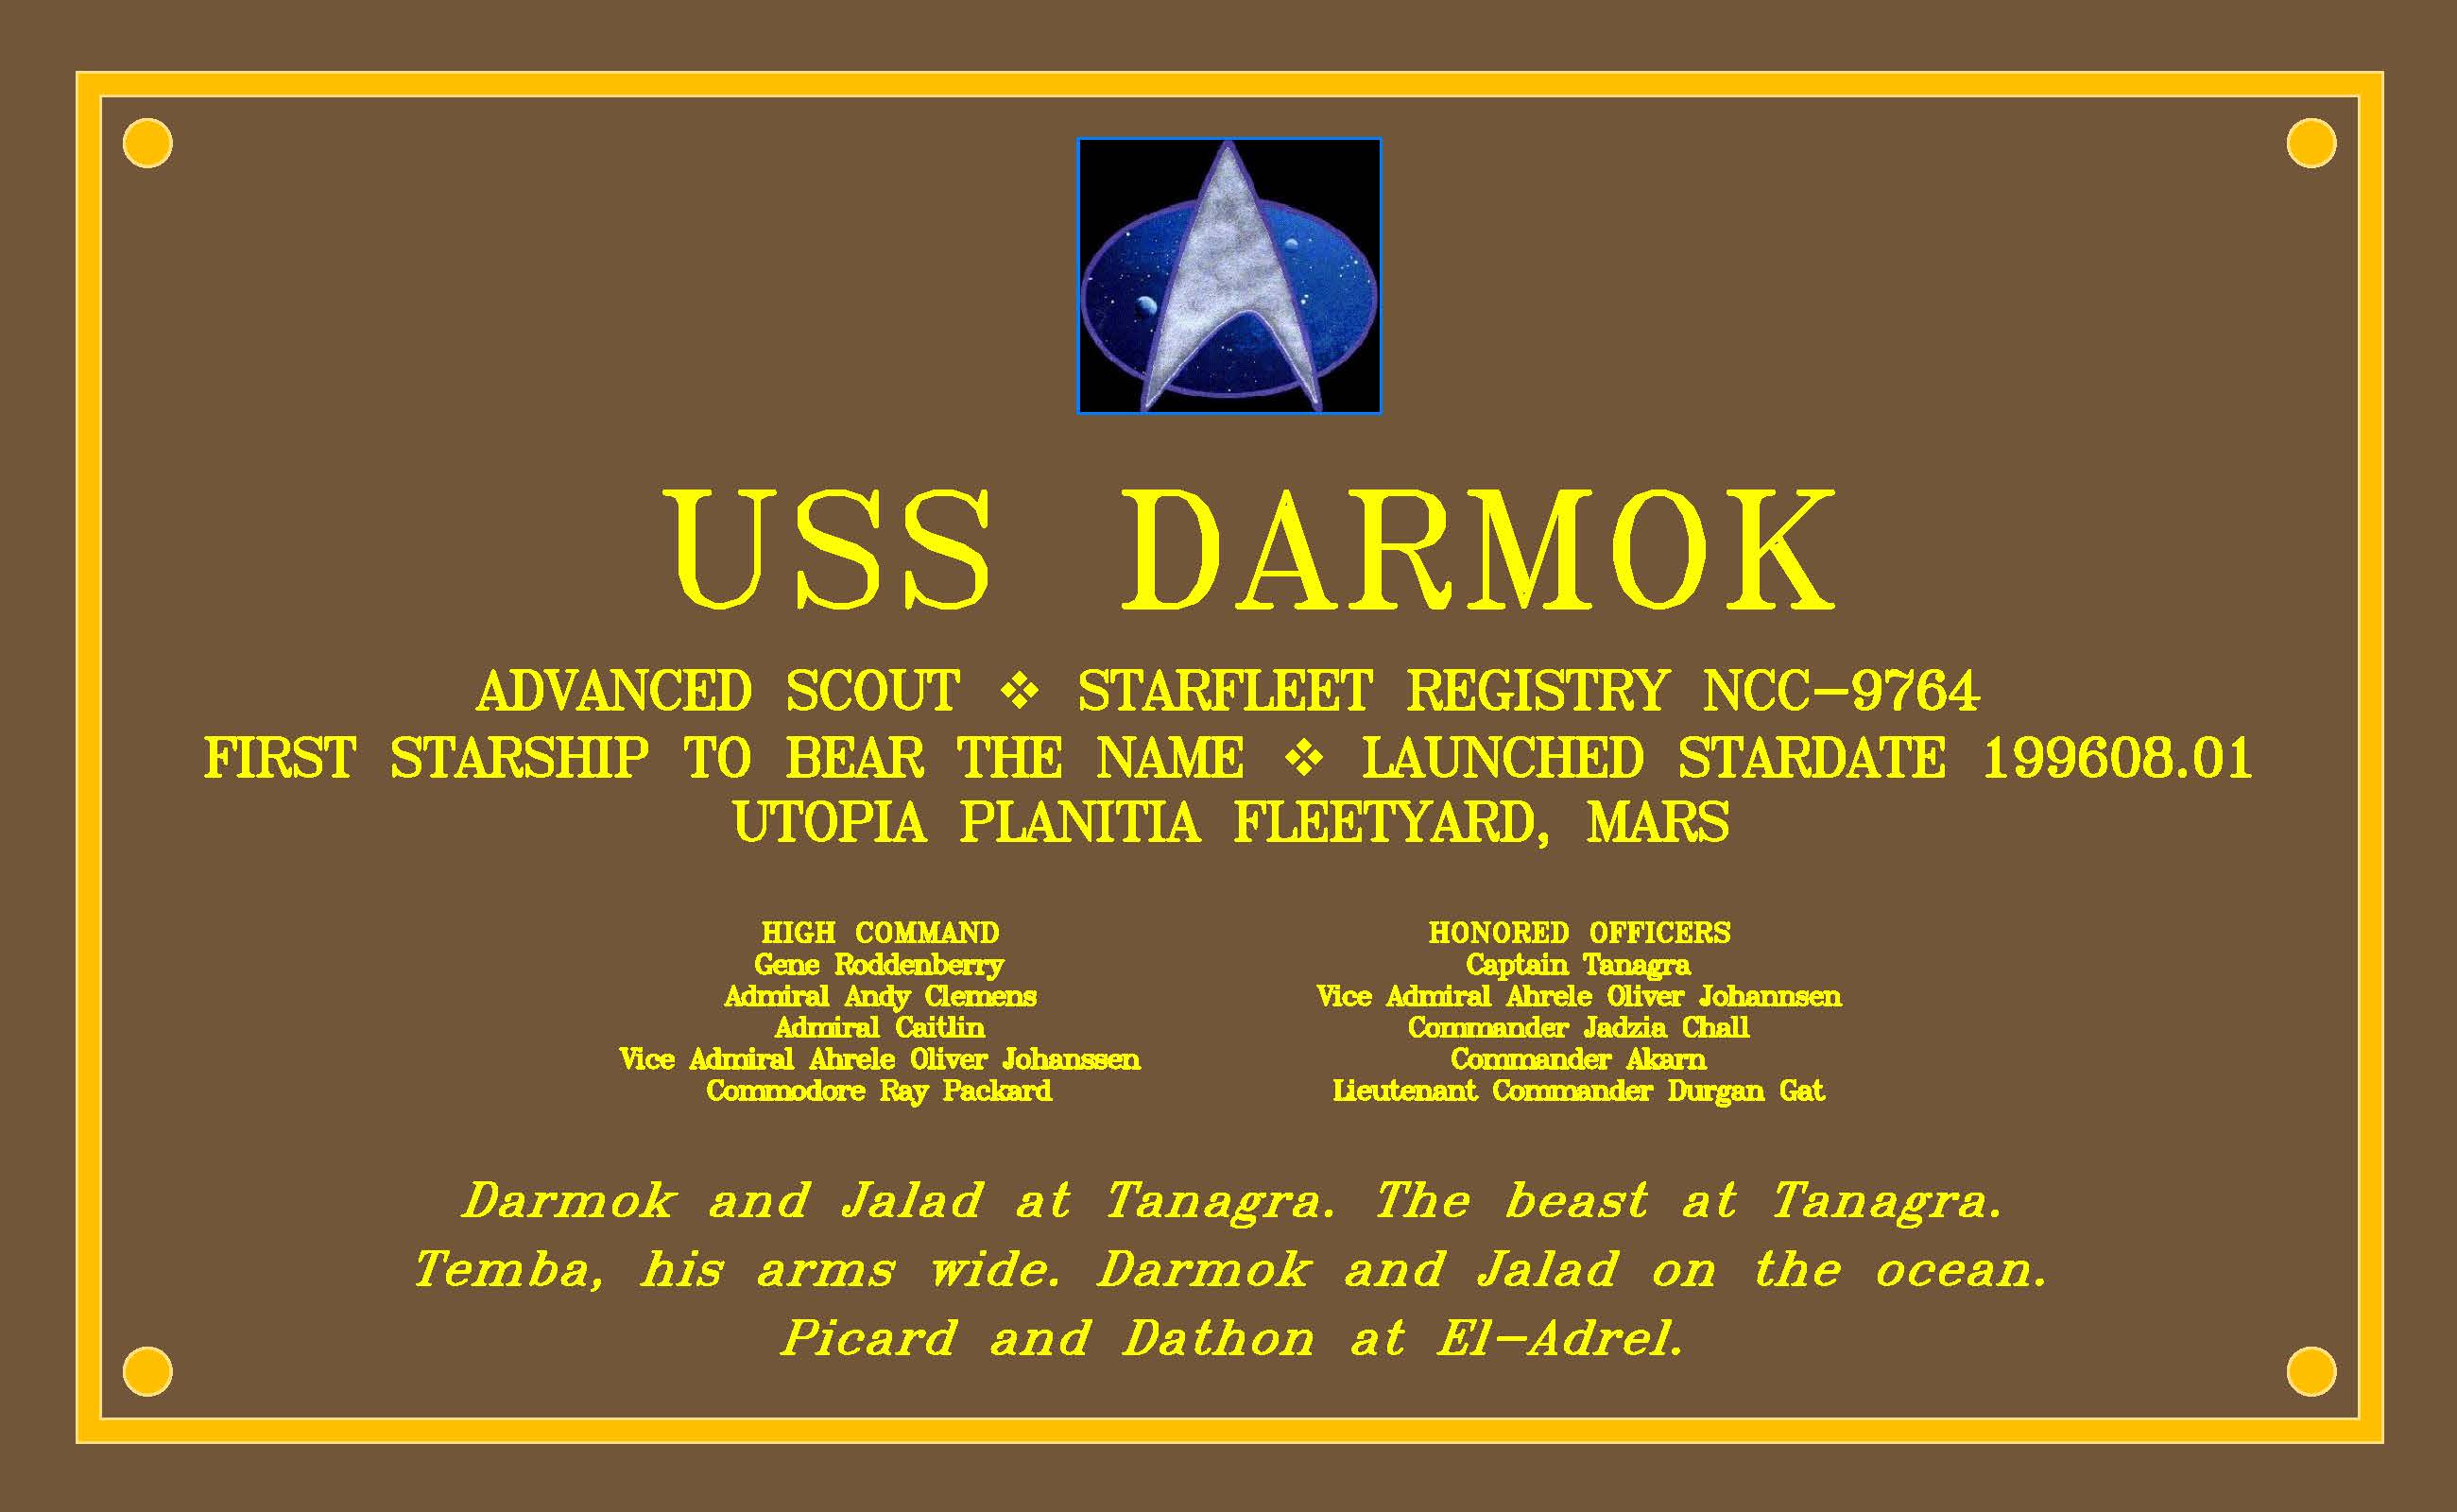 Darmok & Jalad at Tanagra ... Picard & Dathon at El-Adrel.